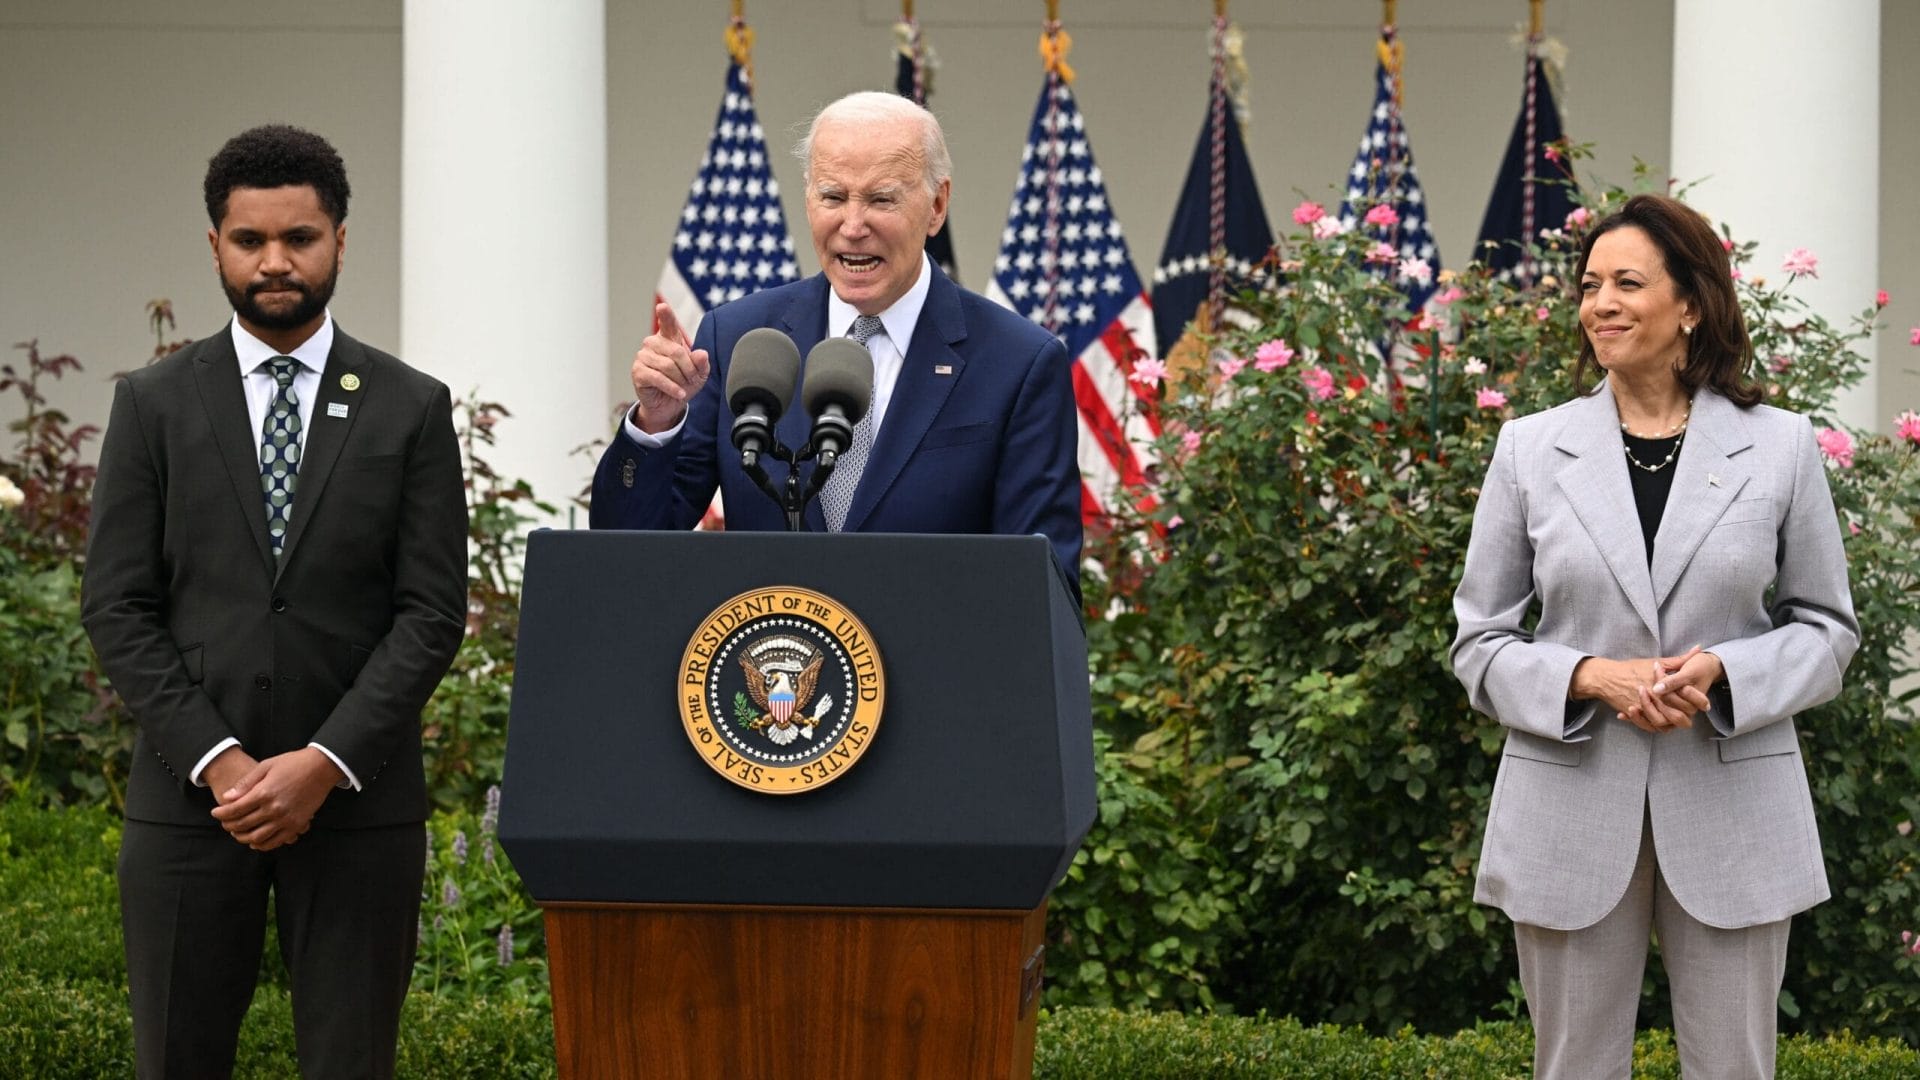 President Joe Biden speaks at an event celebrating the creation of the White House Office of Gun Violence Prevention.